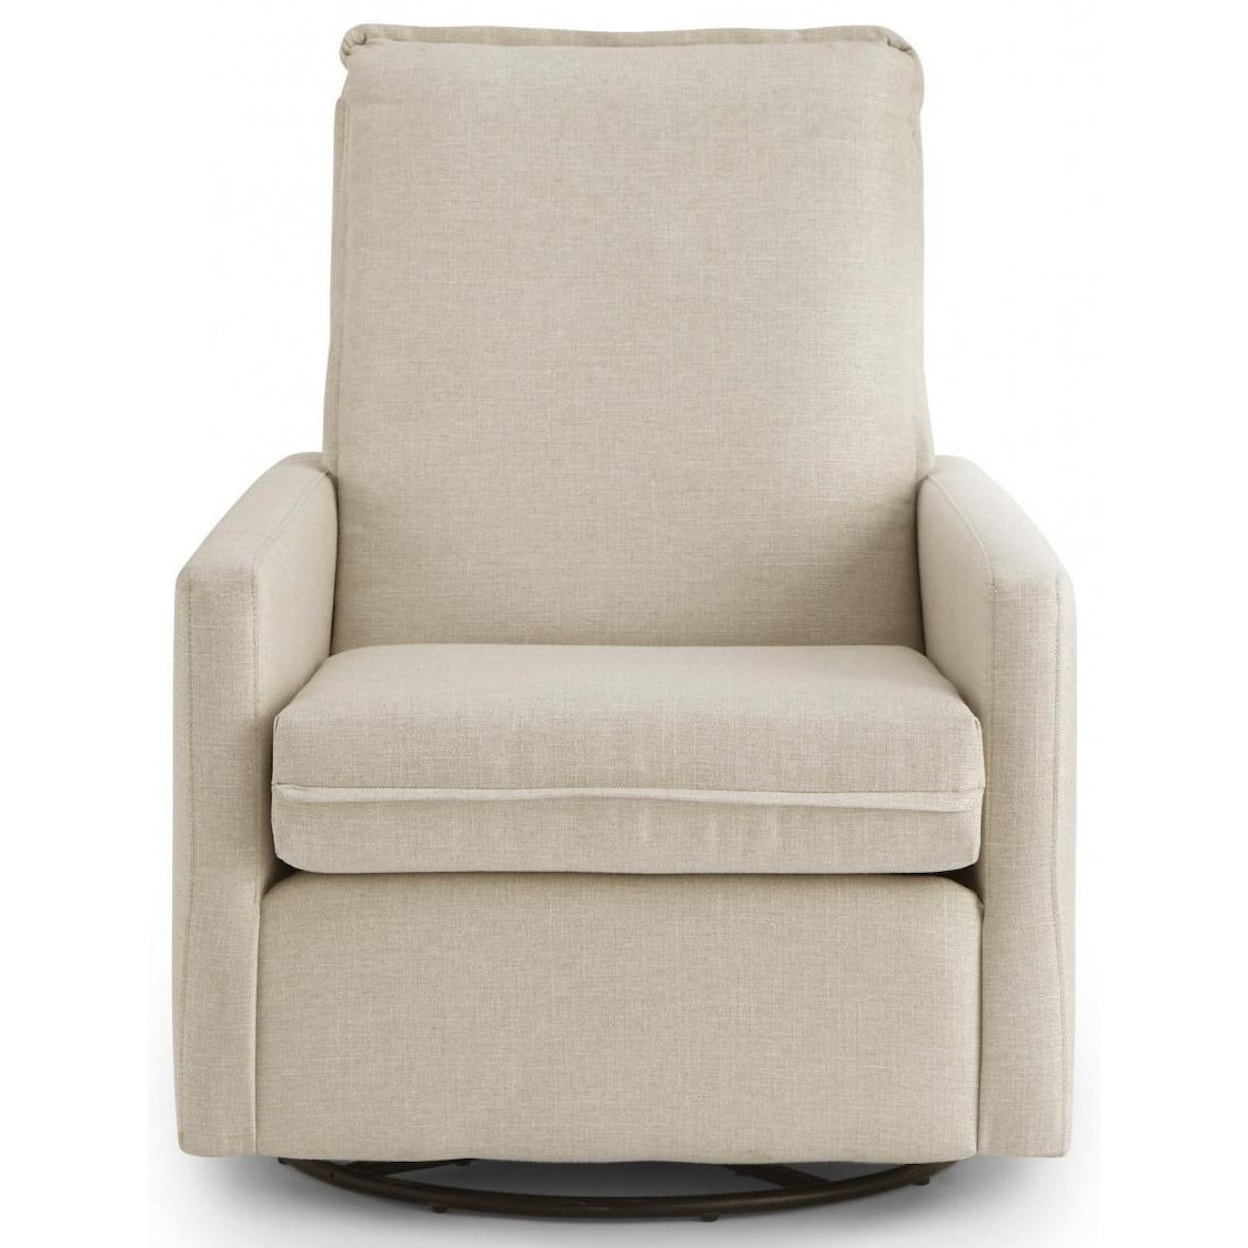 Bravo Furniture Bre Swivel Glider Chair